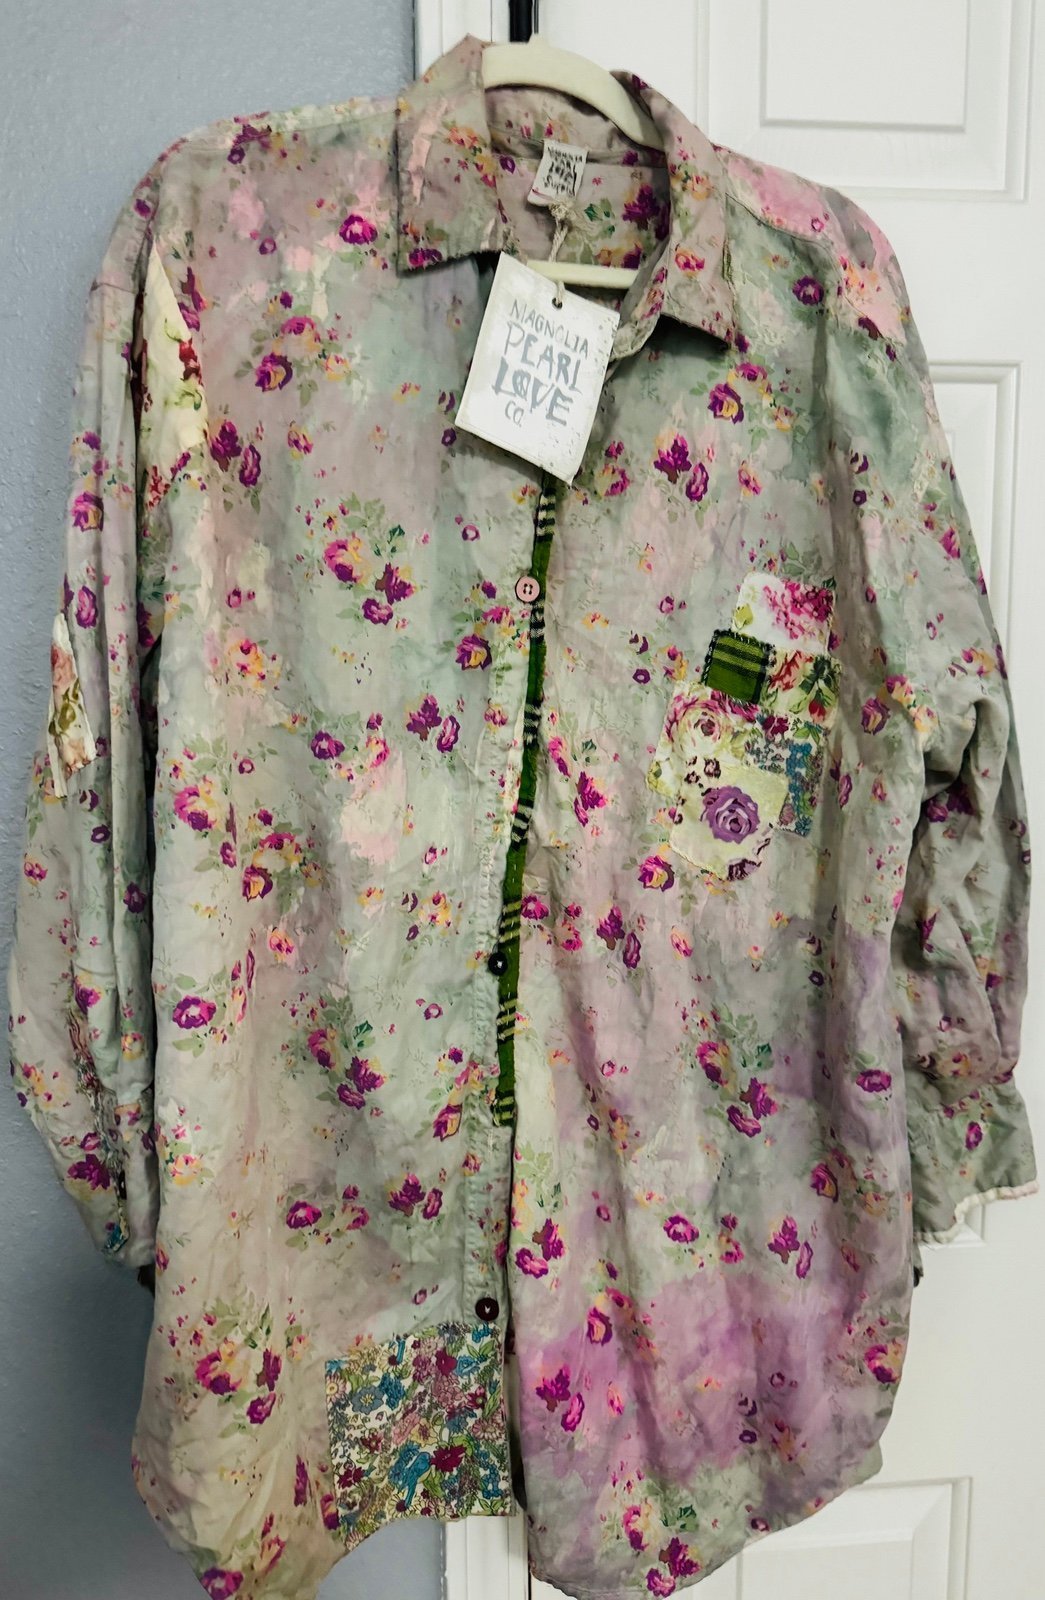 Magnolia Pearl pressed flower shirt 81jdA0zNE